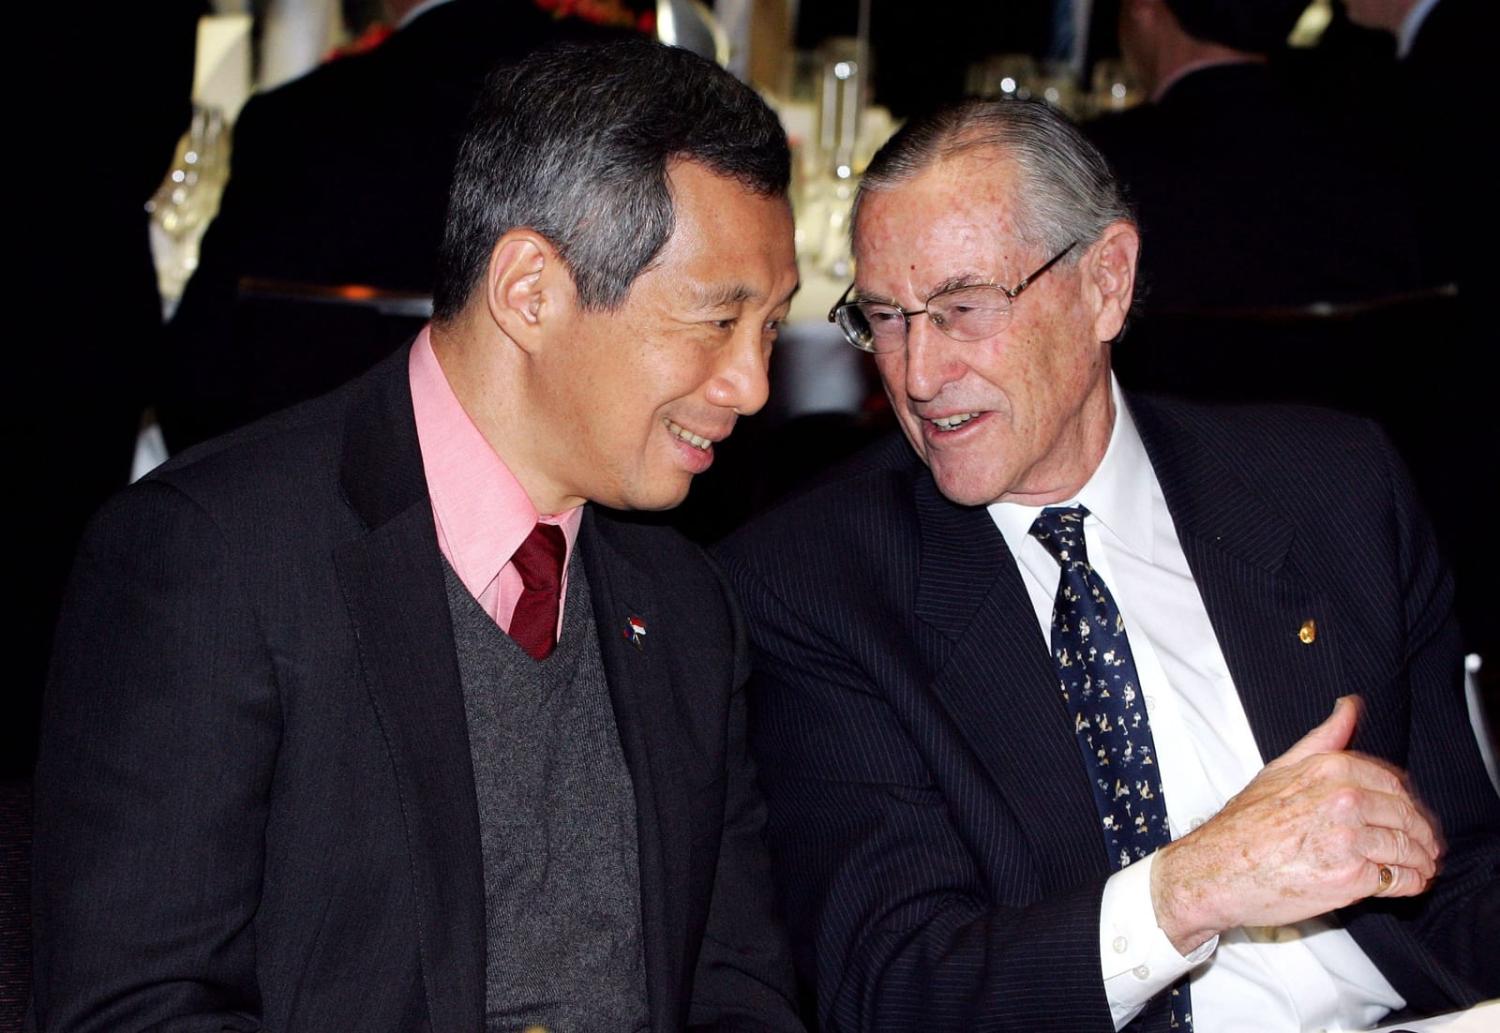 Richard Woolcott, right, alongside Singapore's Prime Minister Lee Hsien Loong in 2006, Sydney (Paul Miller via Getty Images)